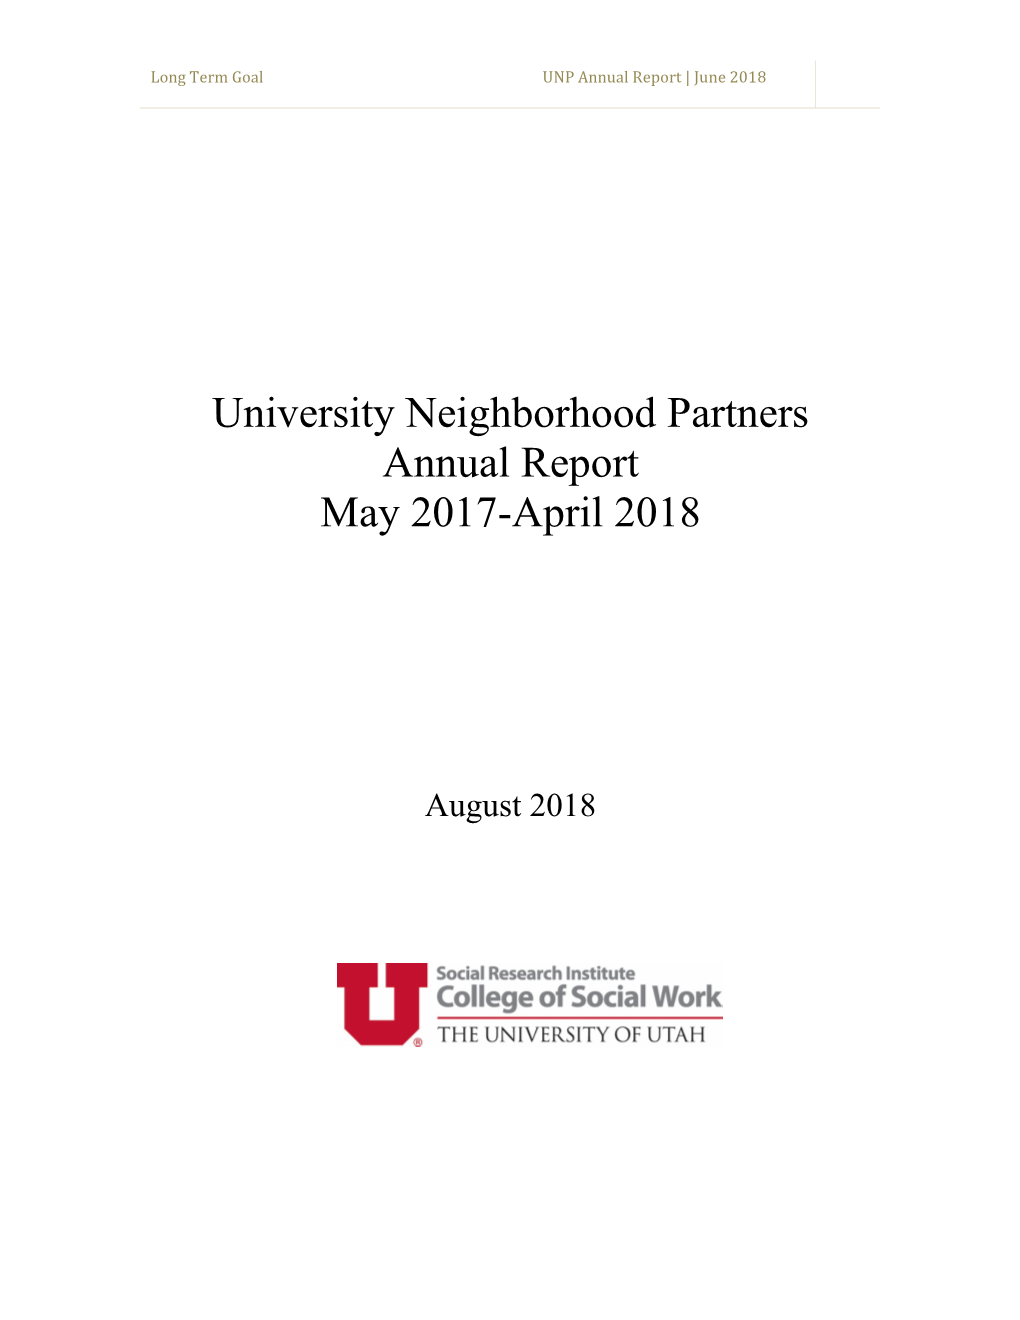 University Neighborhood Partners Annual Report May 2017-April 2018